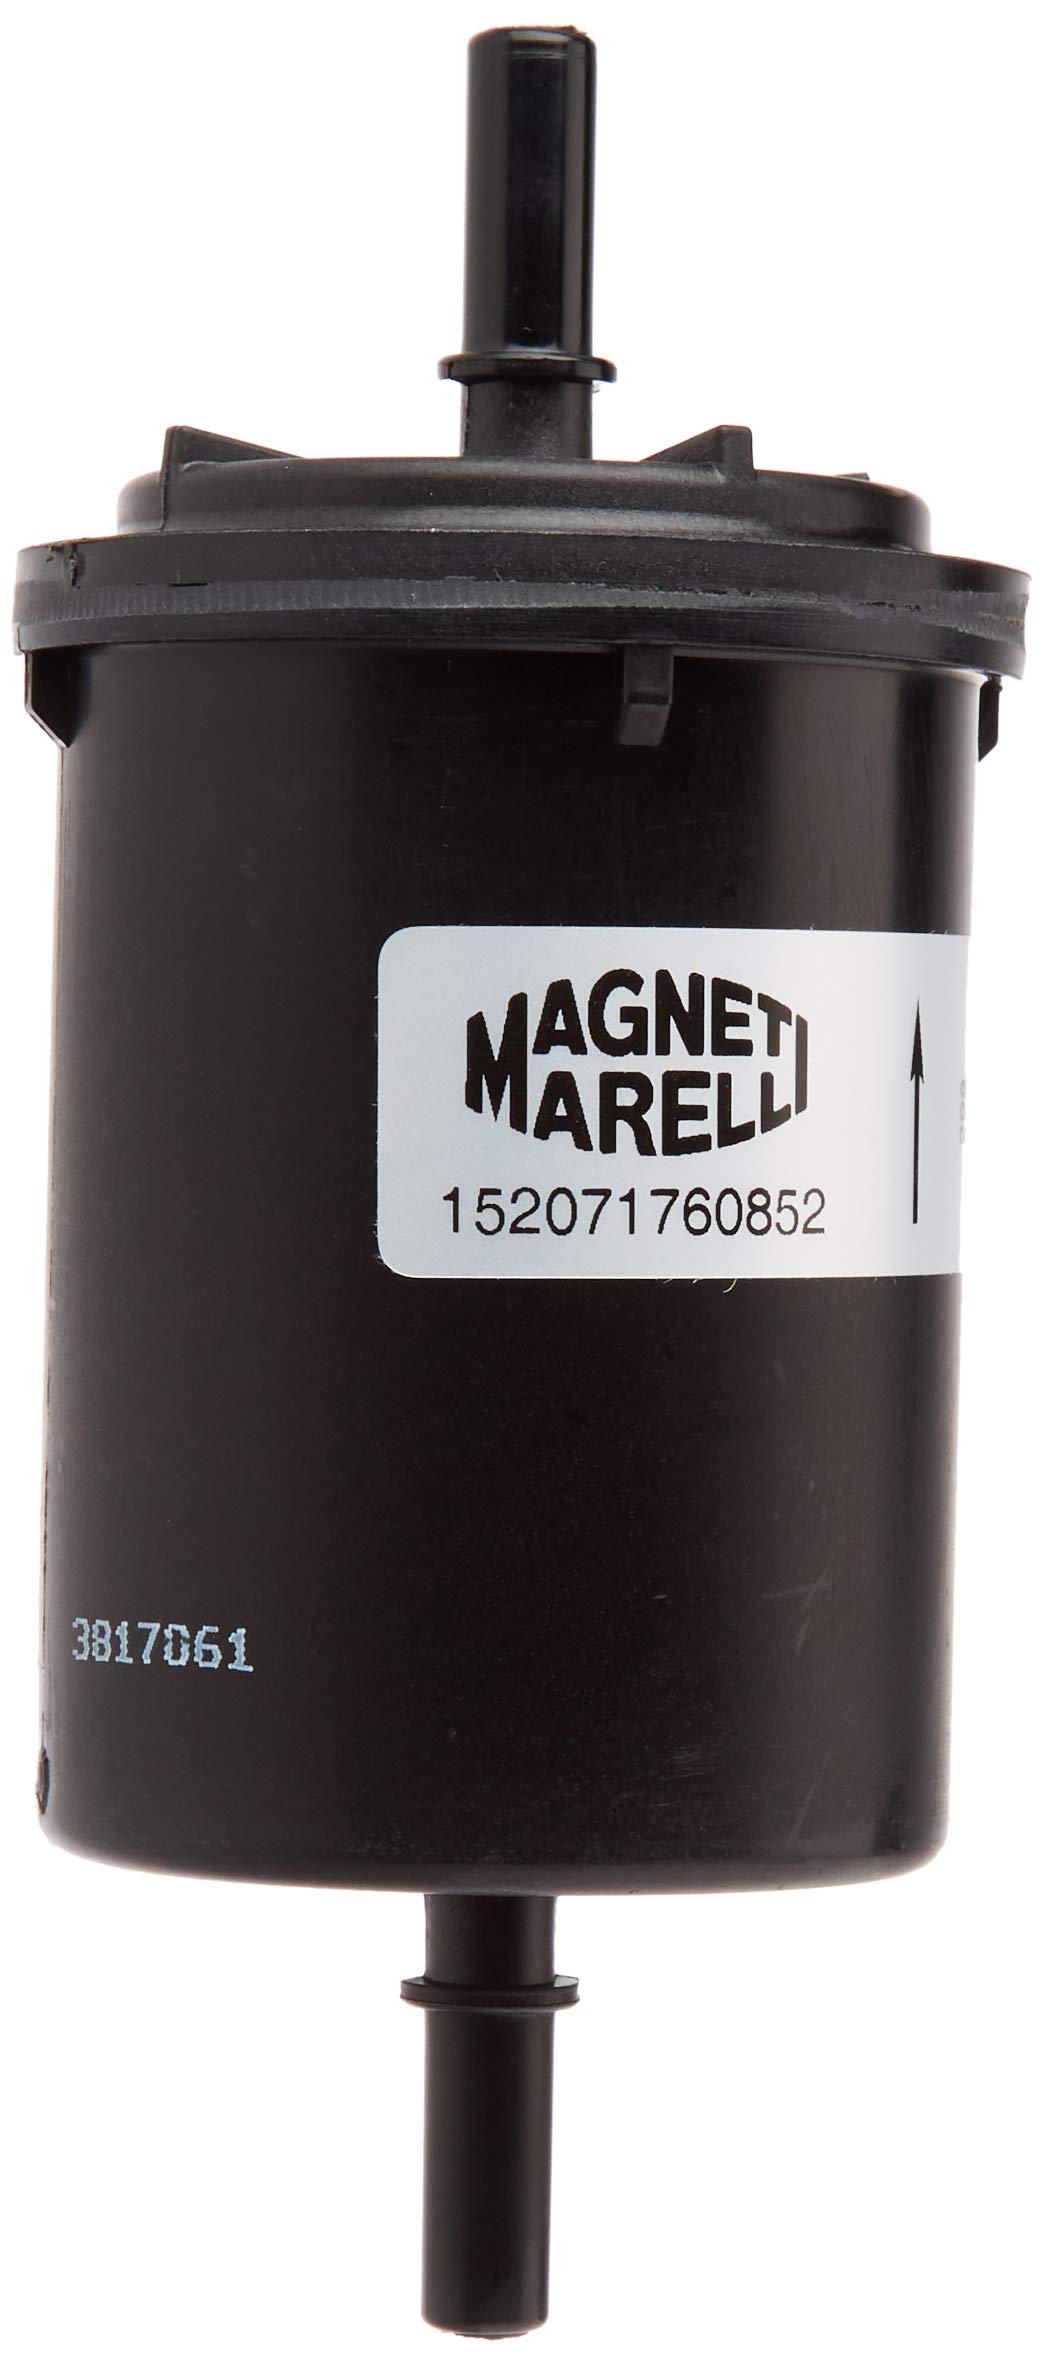 Magneti Marelli 152071760852 Kraftstofffilter von Magneti Marelli